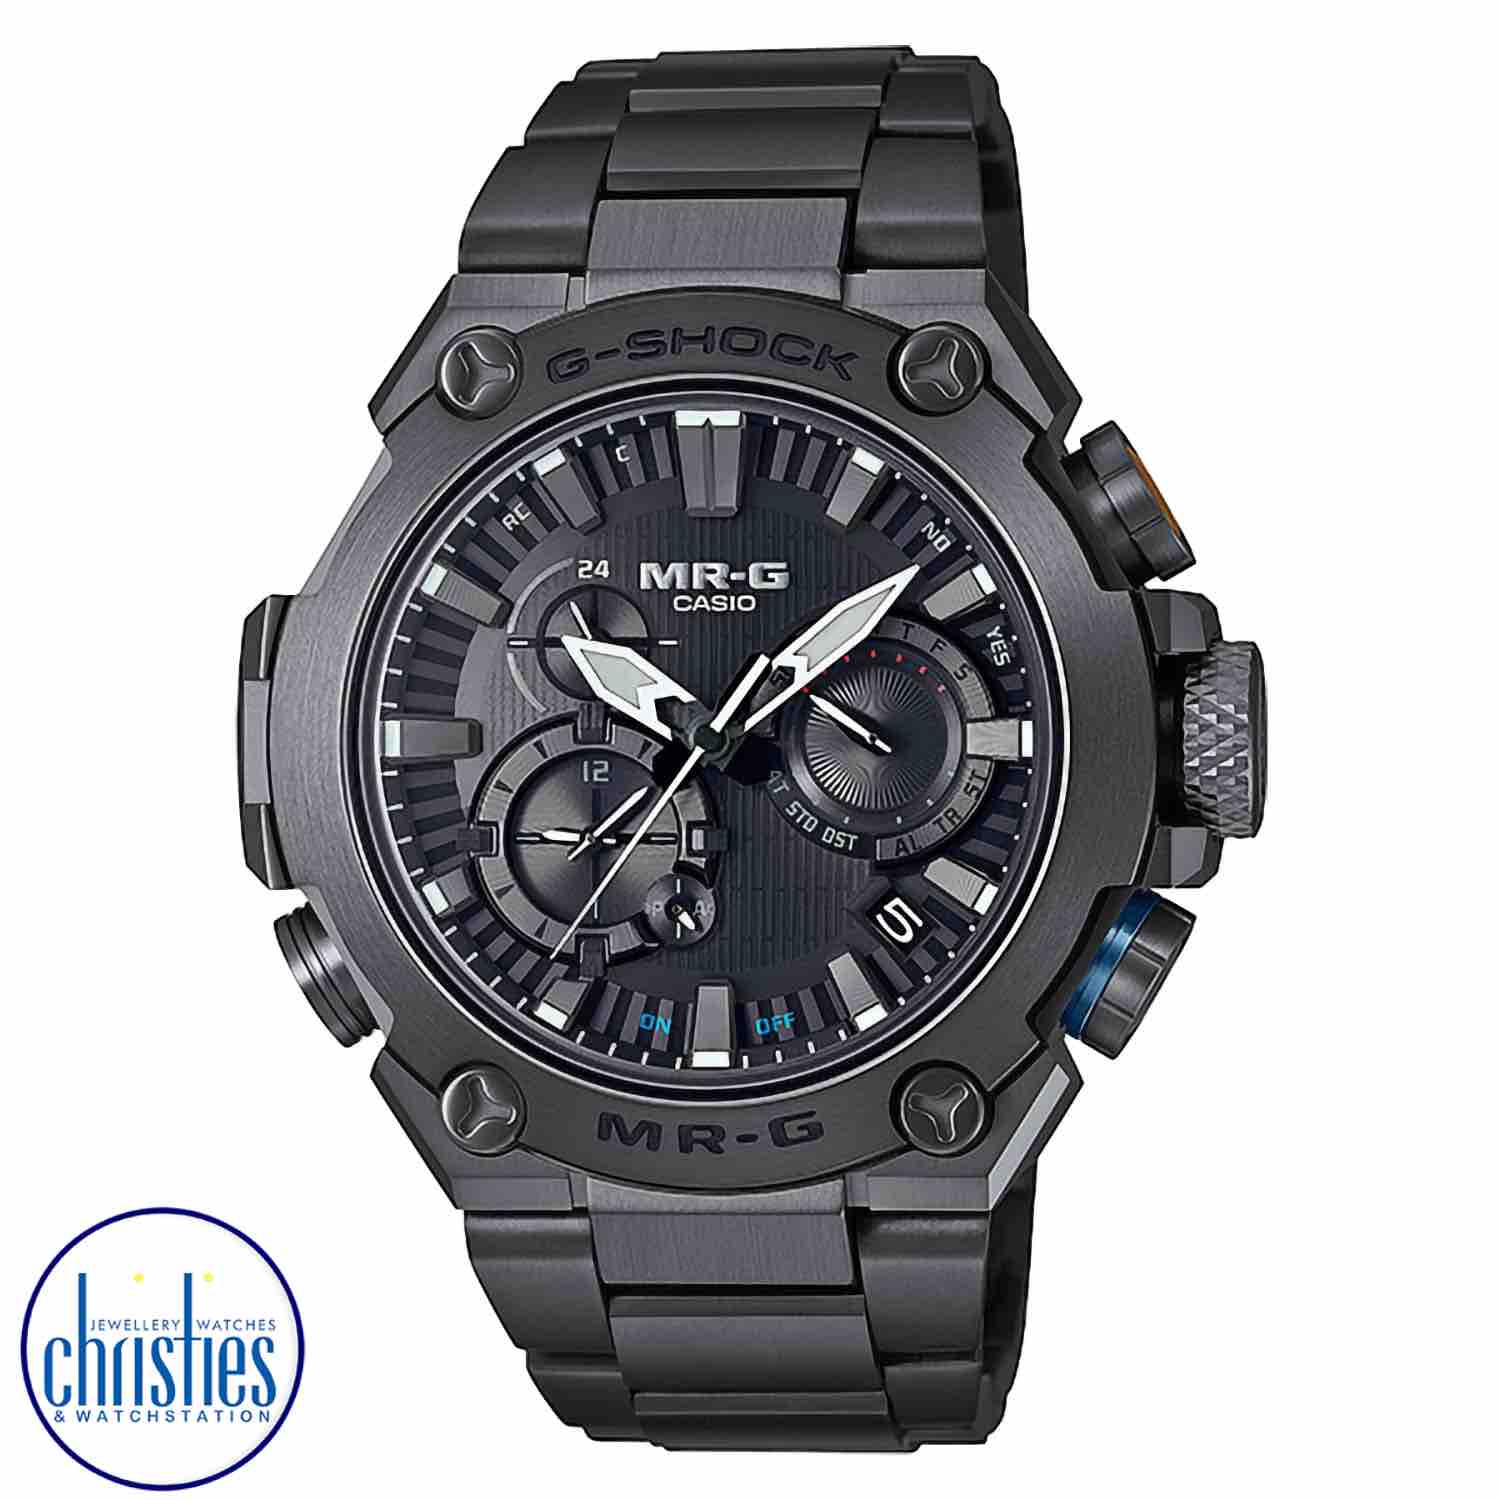 MRGB2000B-1A1 G-Shock MRG Series Titanium  Watch g-shock pascoes